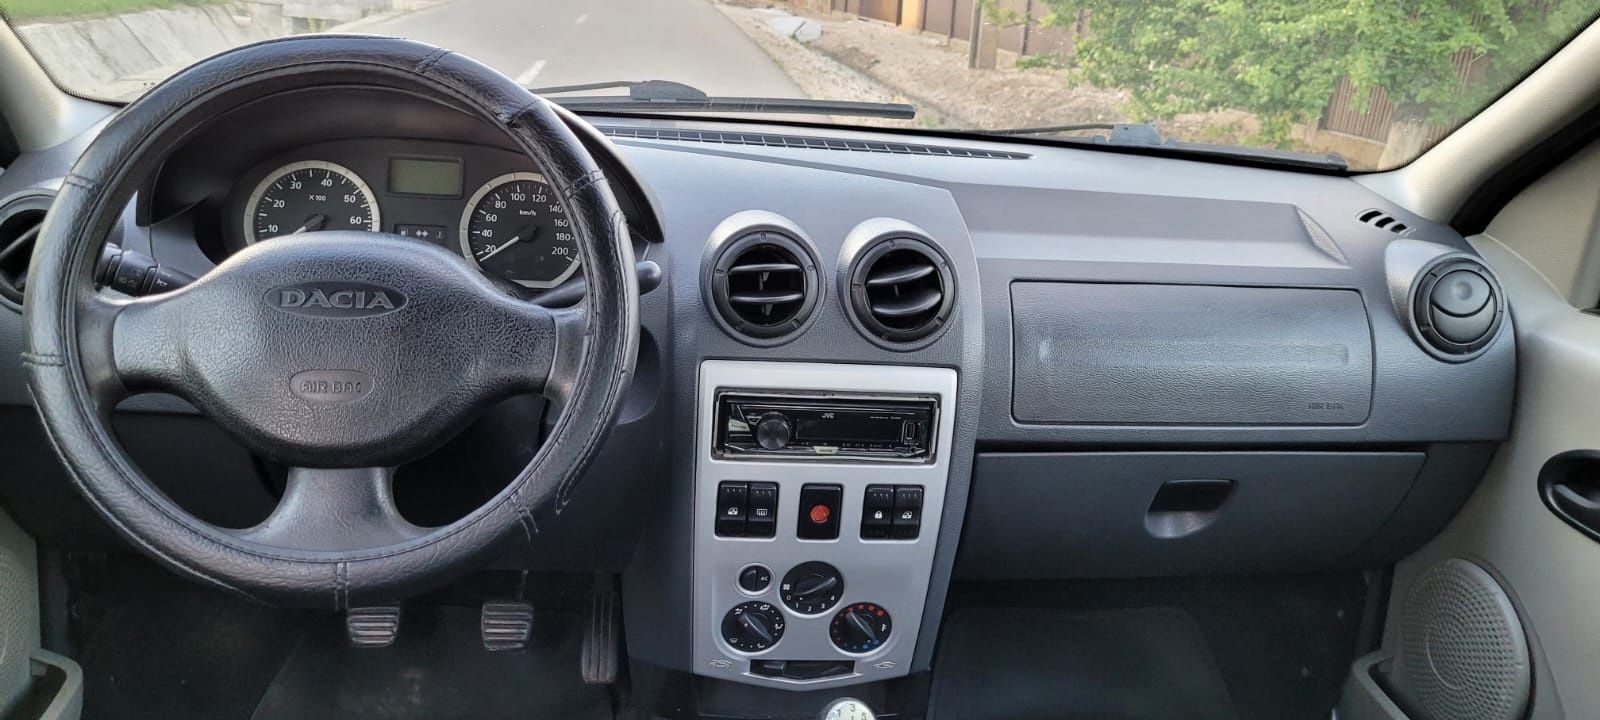 Dacia Logan 1.4MPI Euro 4